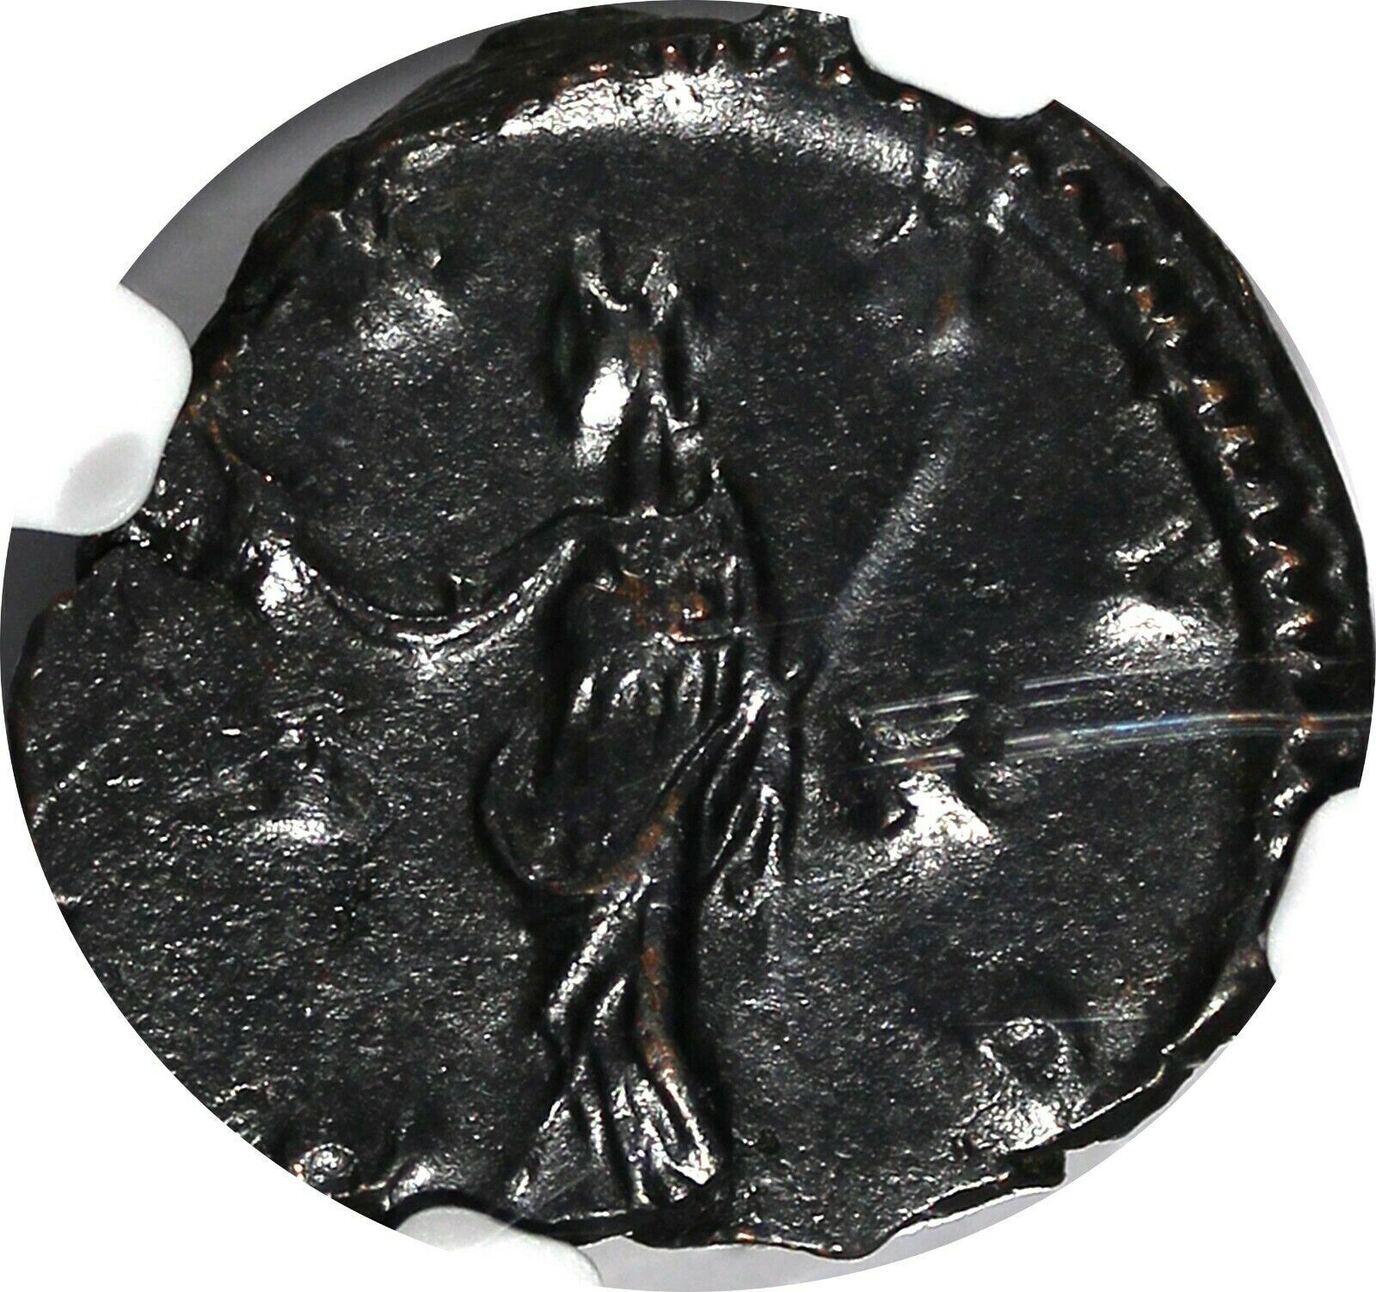 Denarius Romano-Gallic Bi Double Victorinus AD 269-271 Goddess Peace